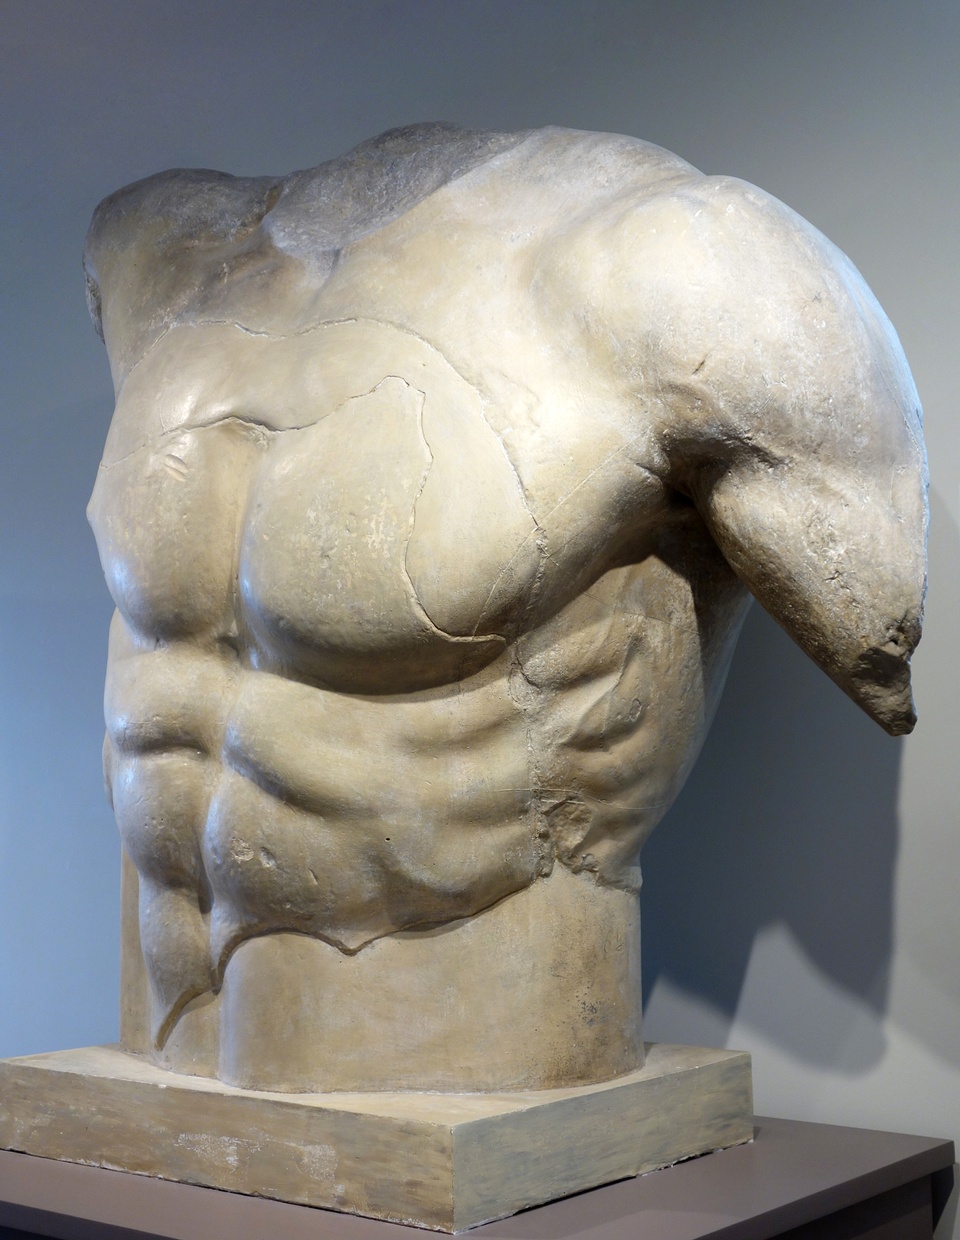 A plaster cast of a muscular male torso.